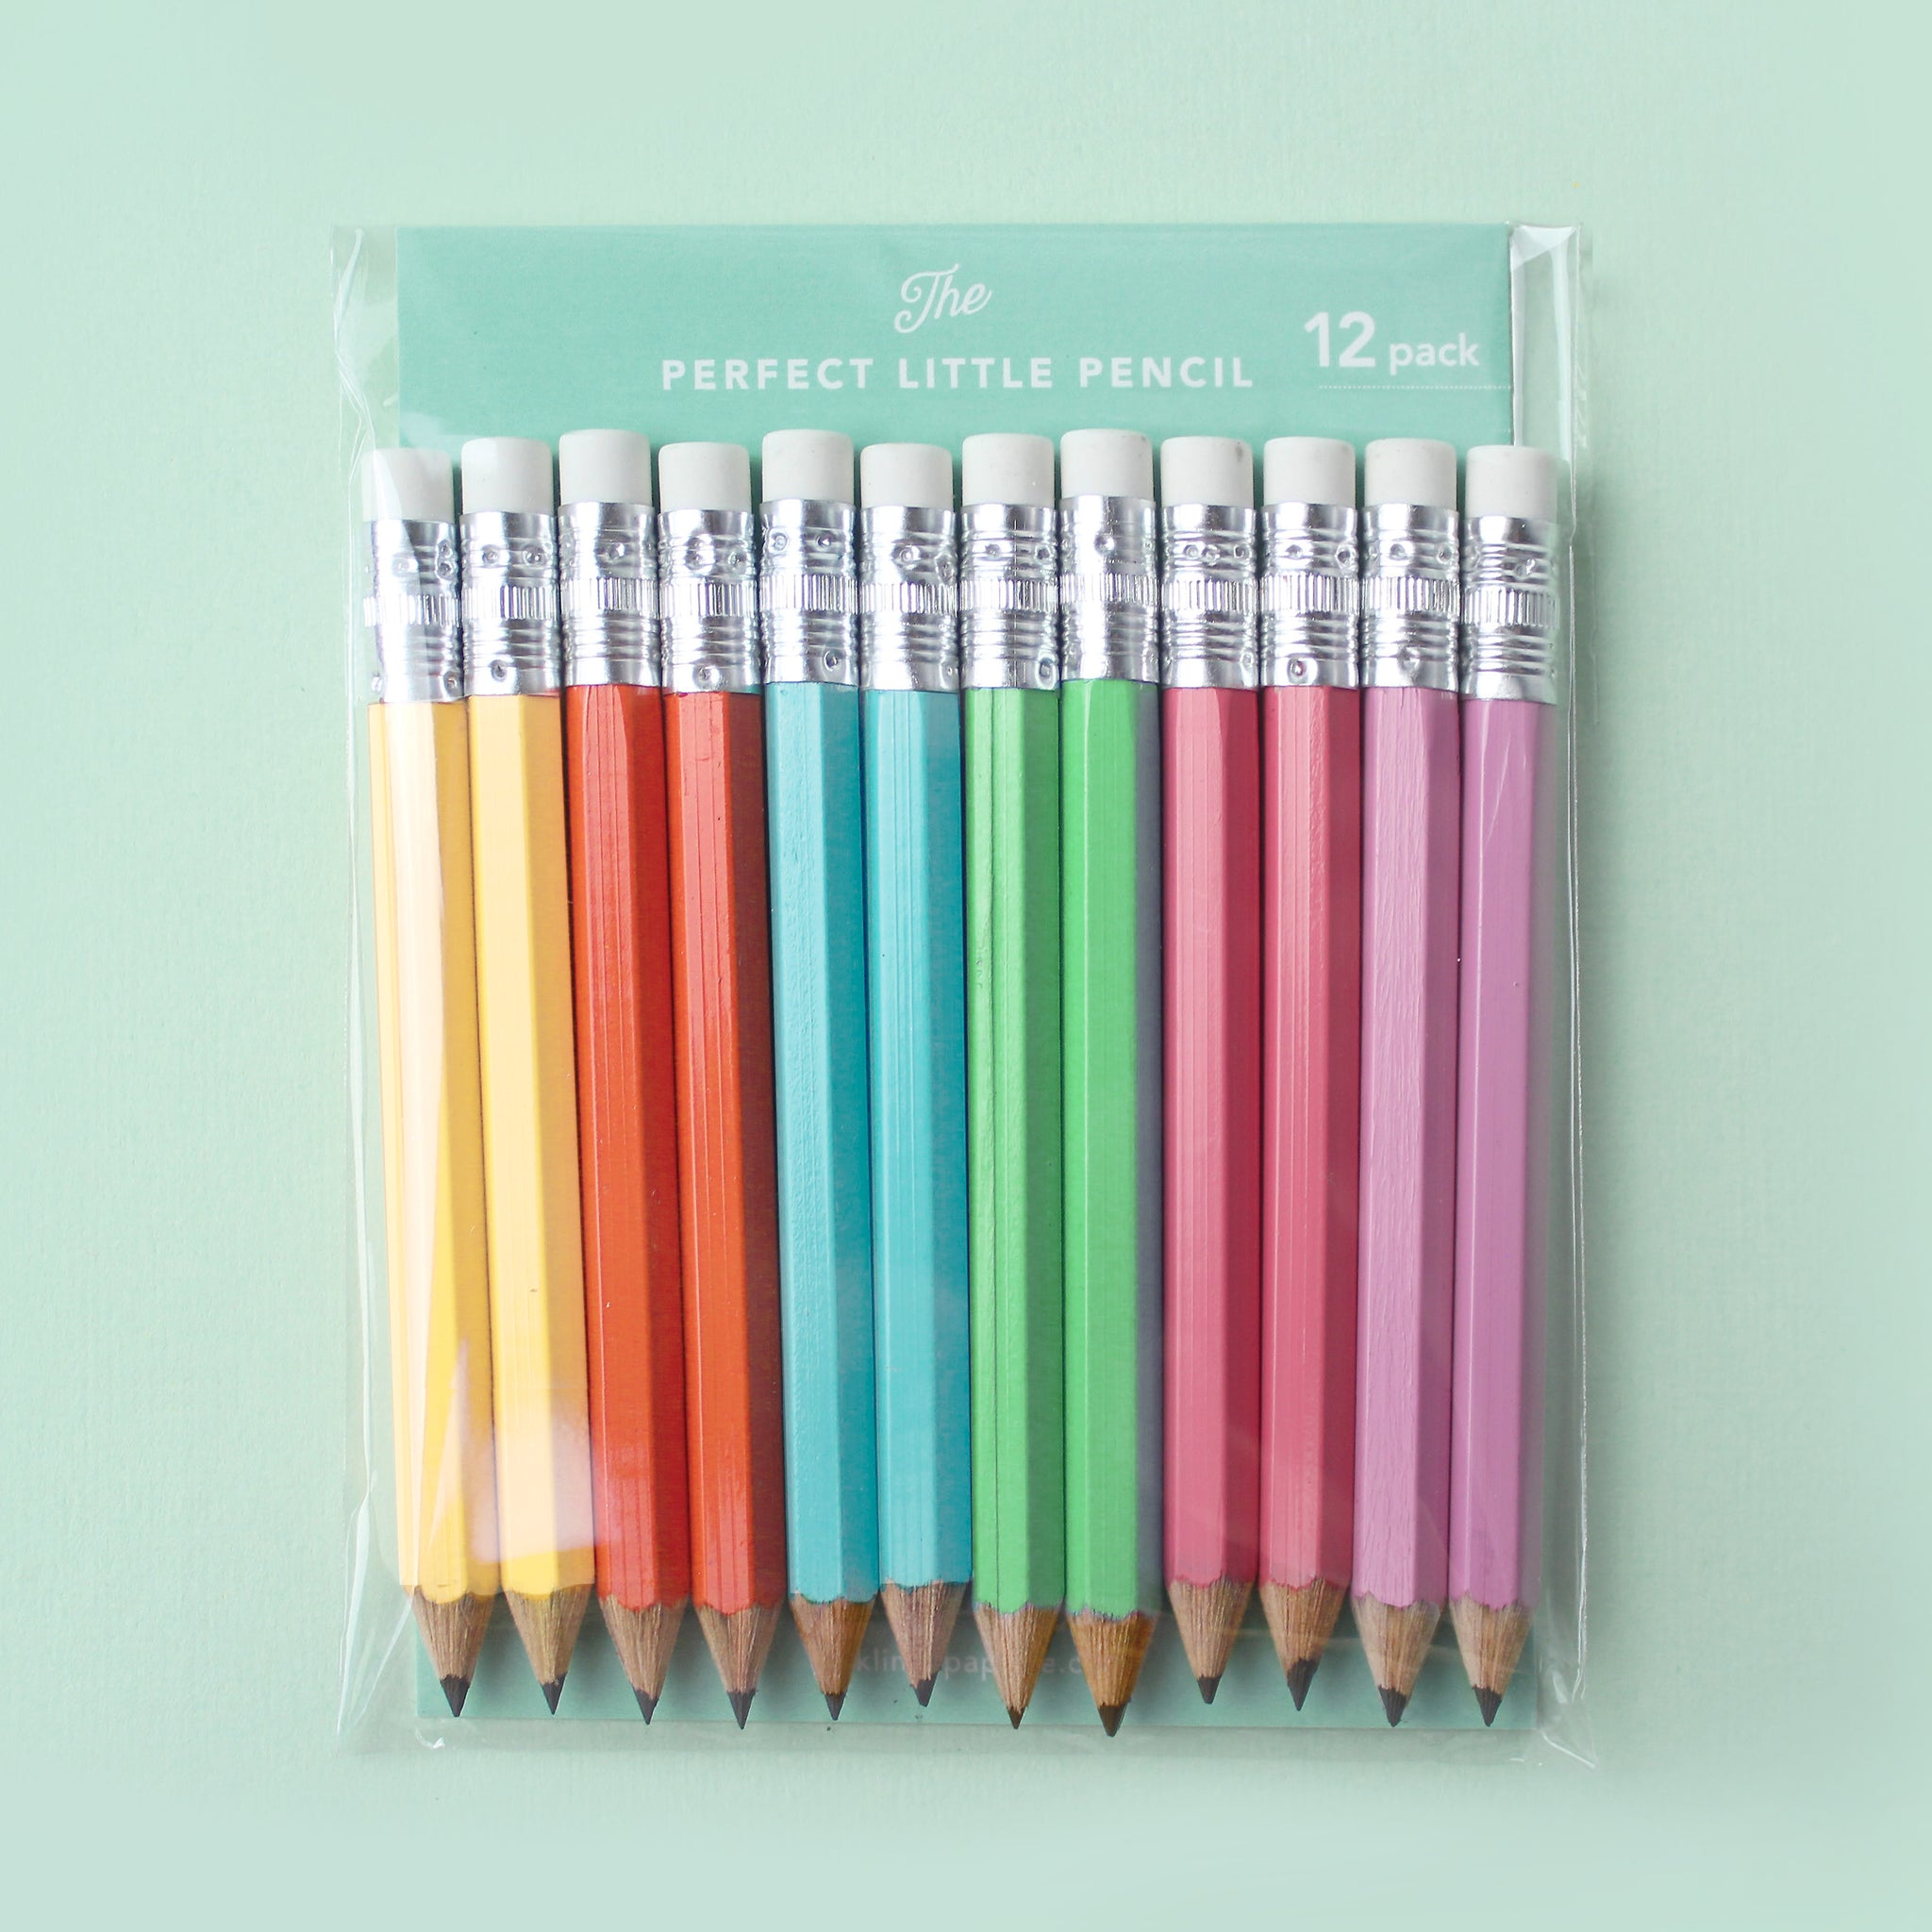 Crtiin 100 Pieces Half Pencils Baby Shower Pencils Sharpened